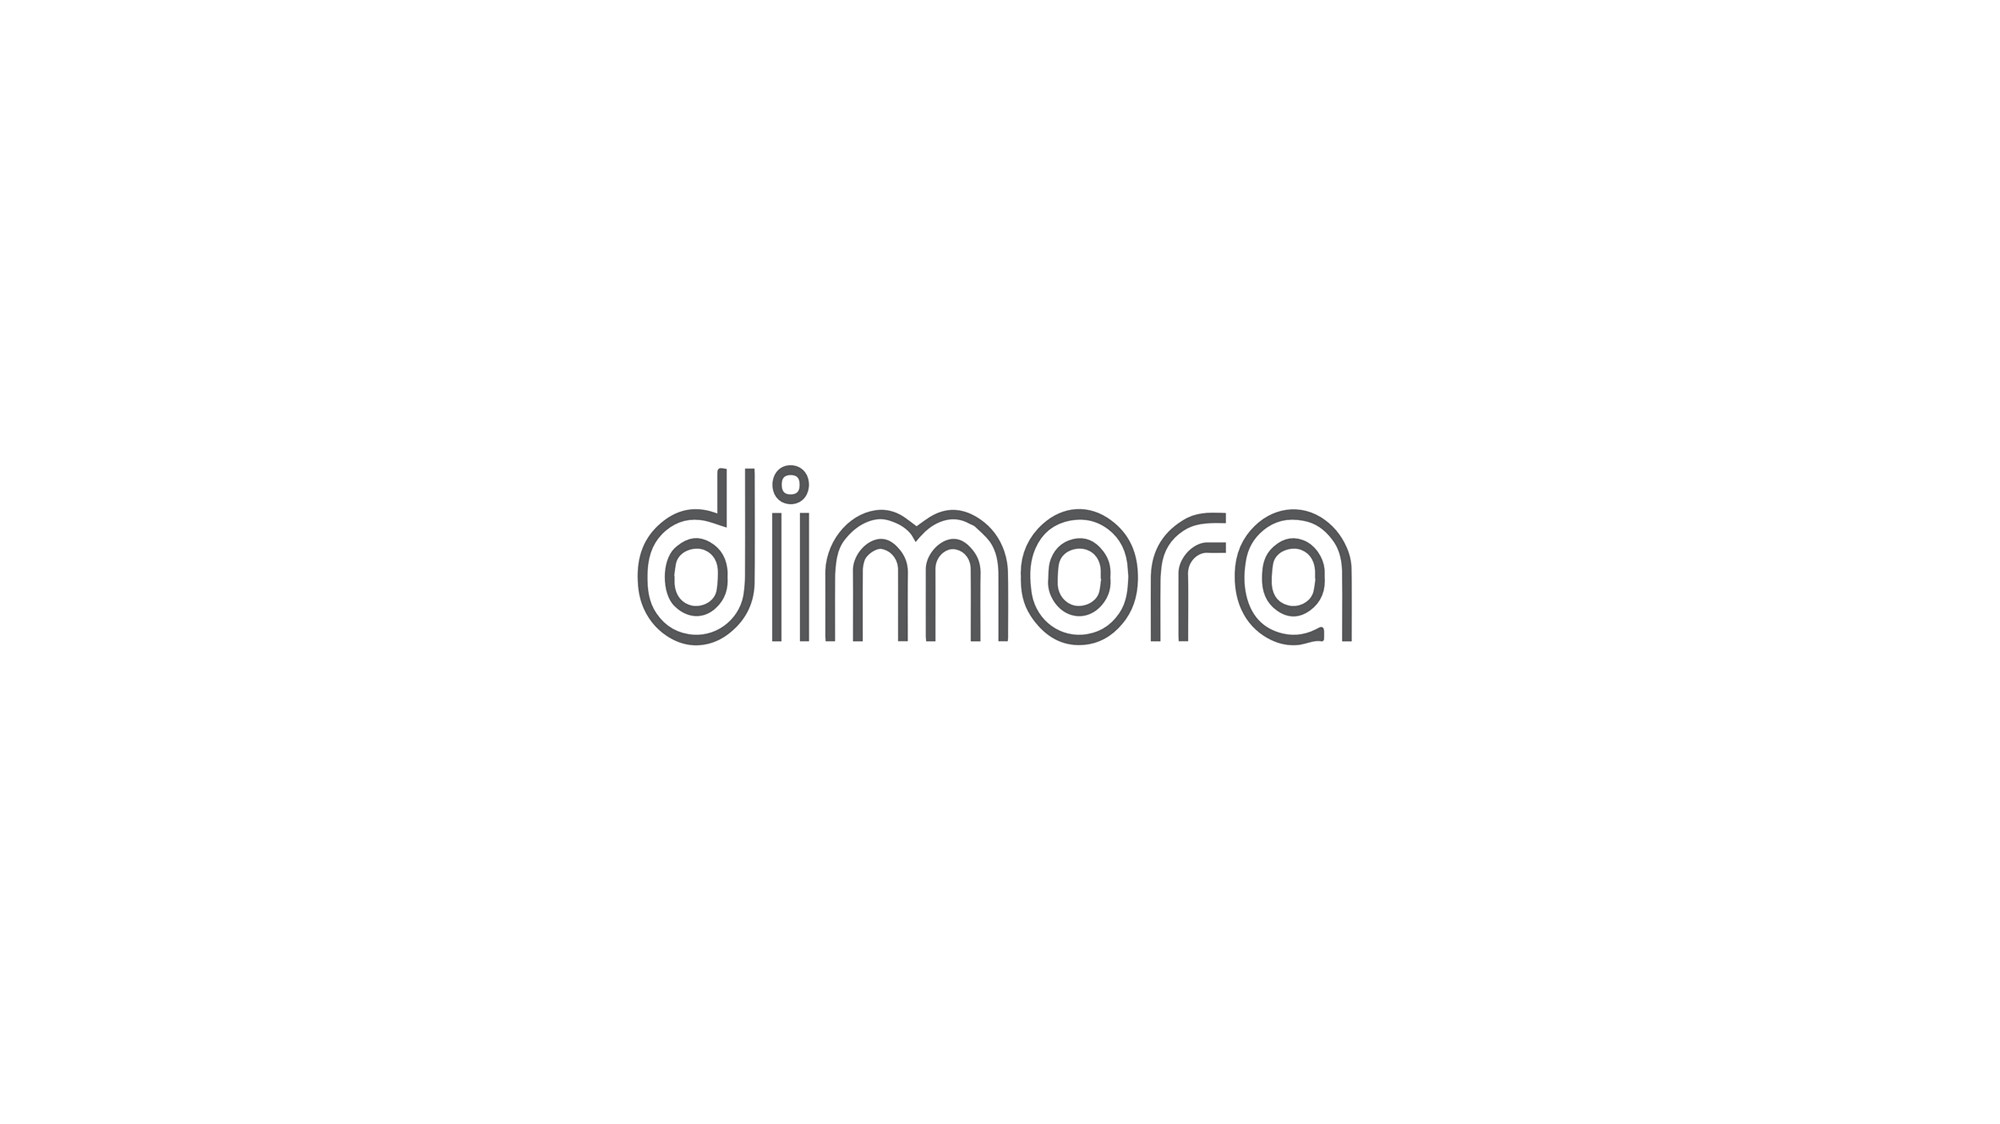 Logo of the Dimora development at 134-136 Broadway in Ealing, London W13.